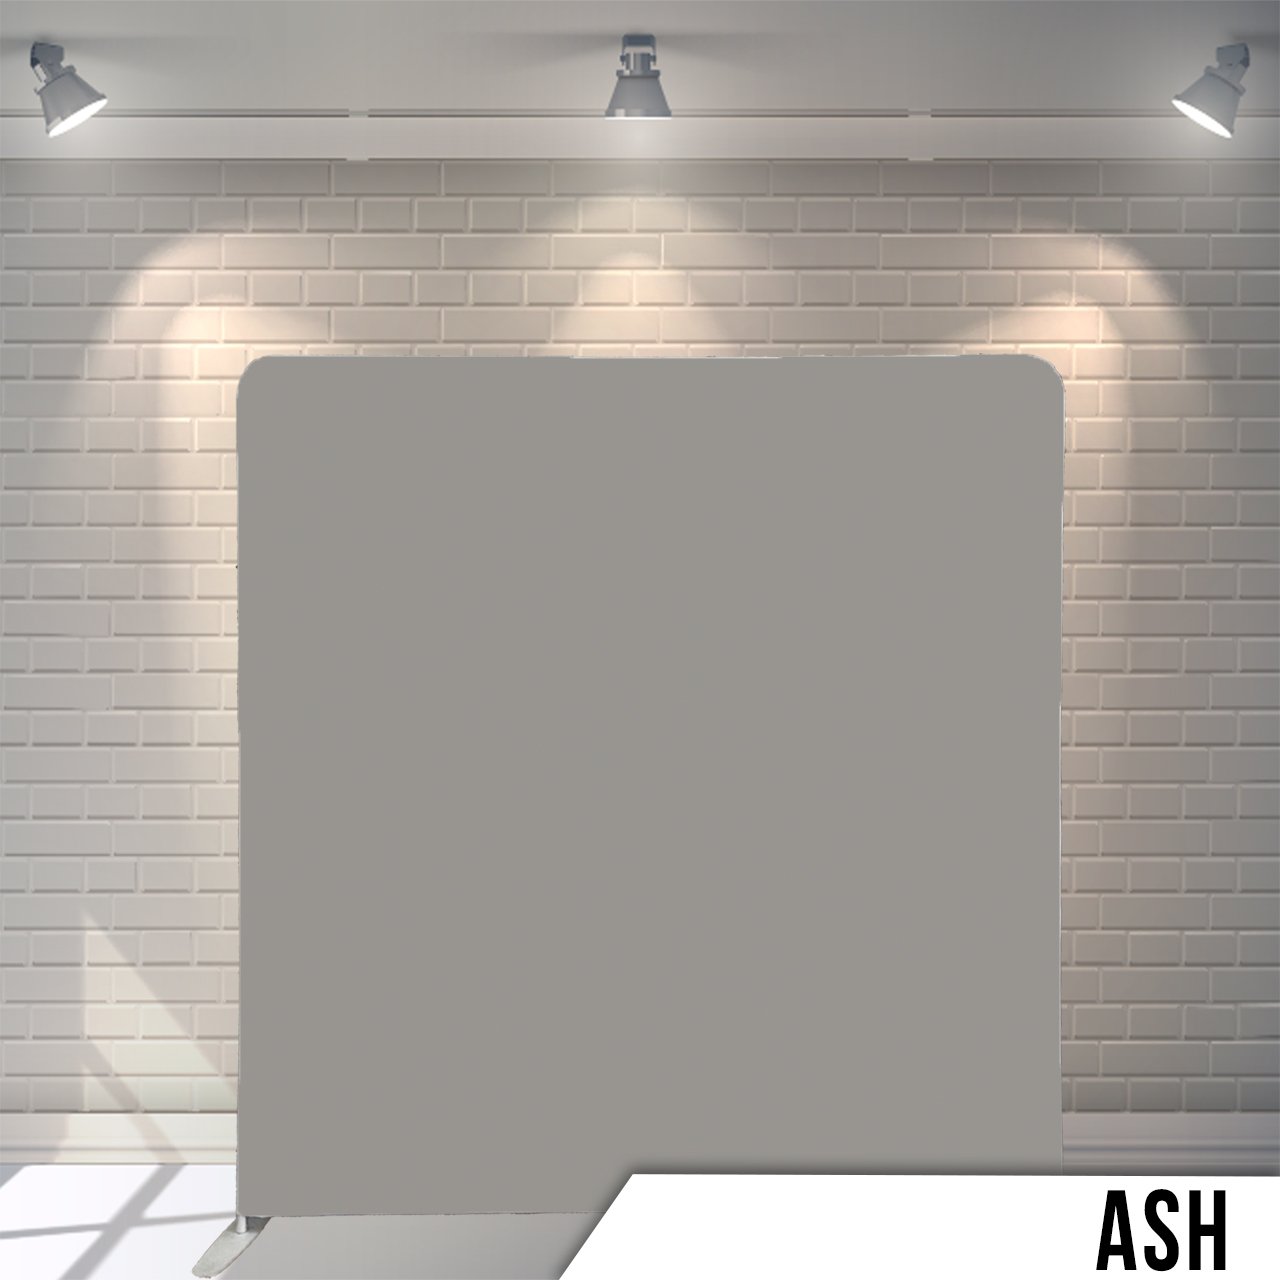 Ash (1).jpg